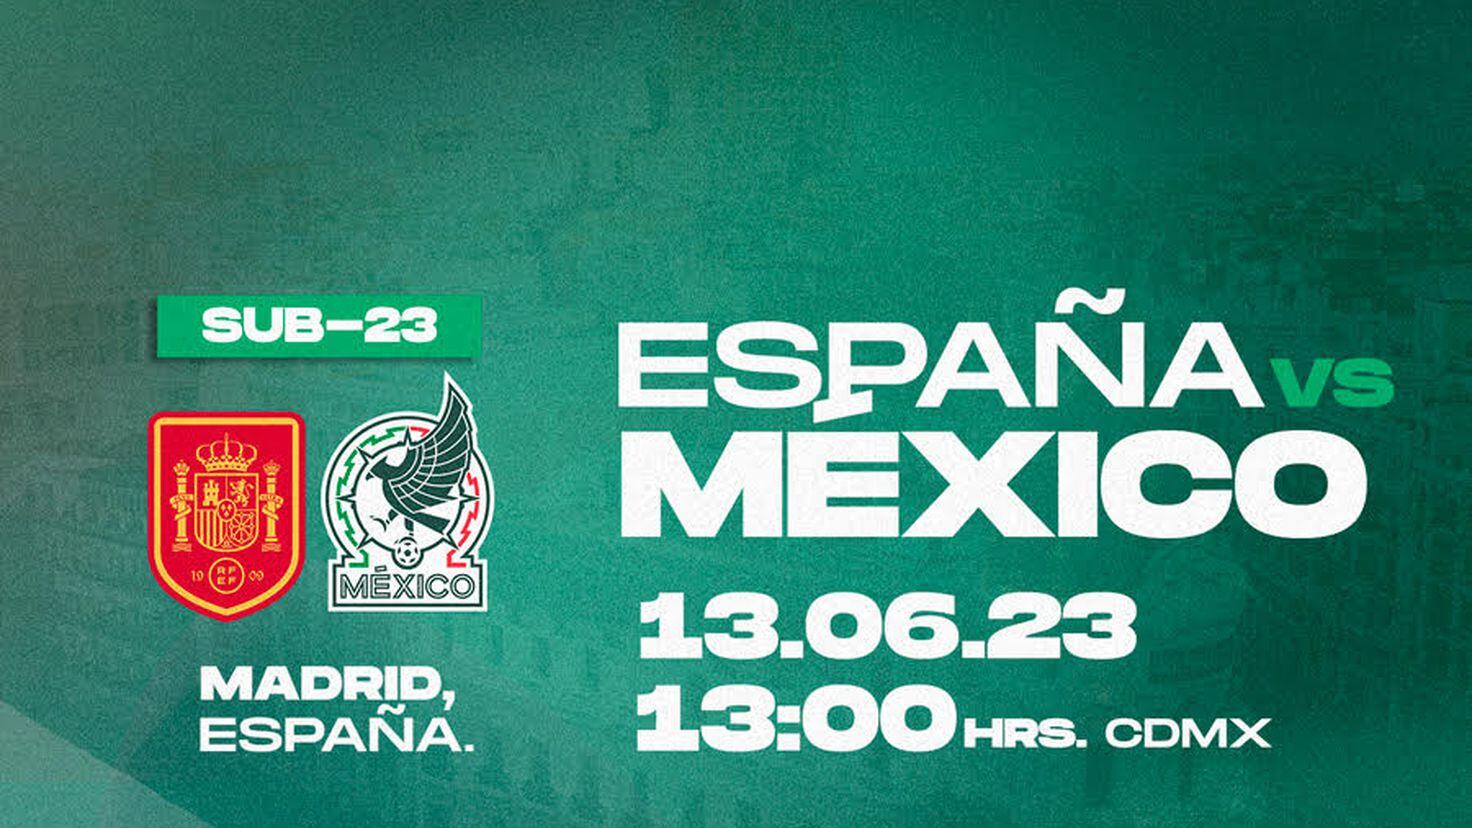 La Sub-23 de México se enfrenta a España en Madrid